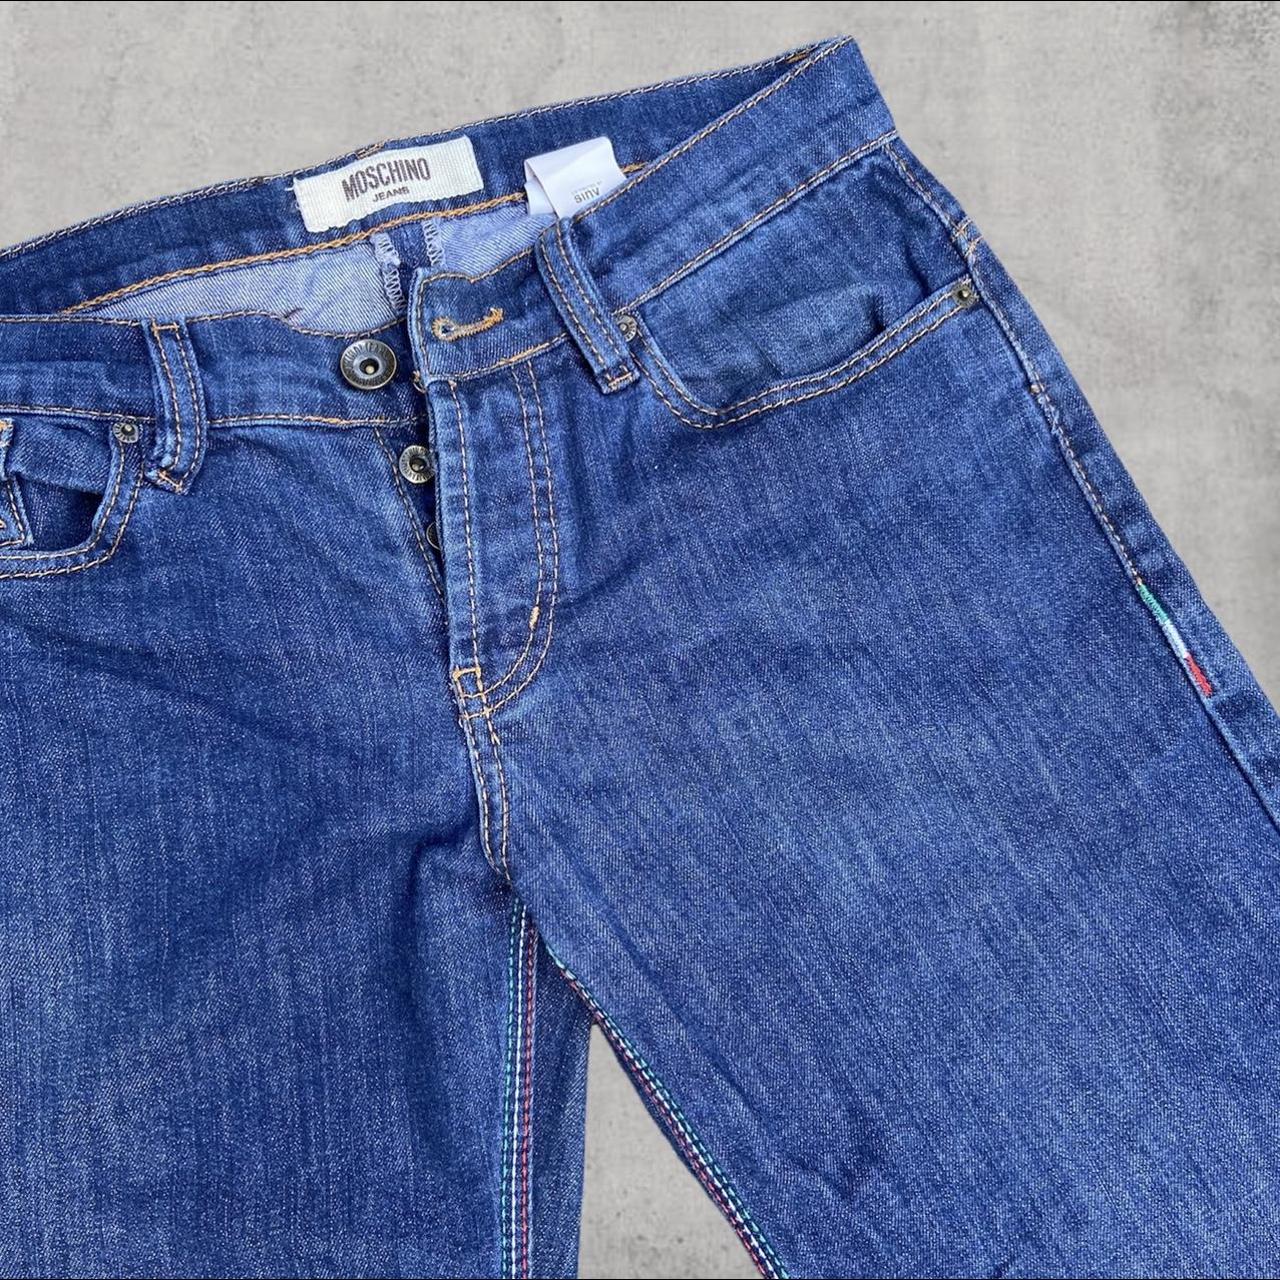 Moschino Women's Navy Jeans | Depop